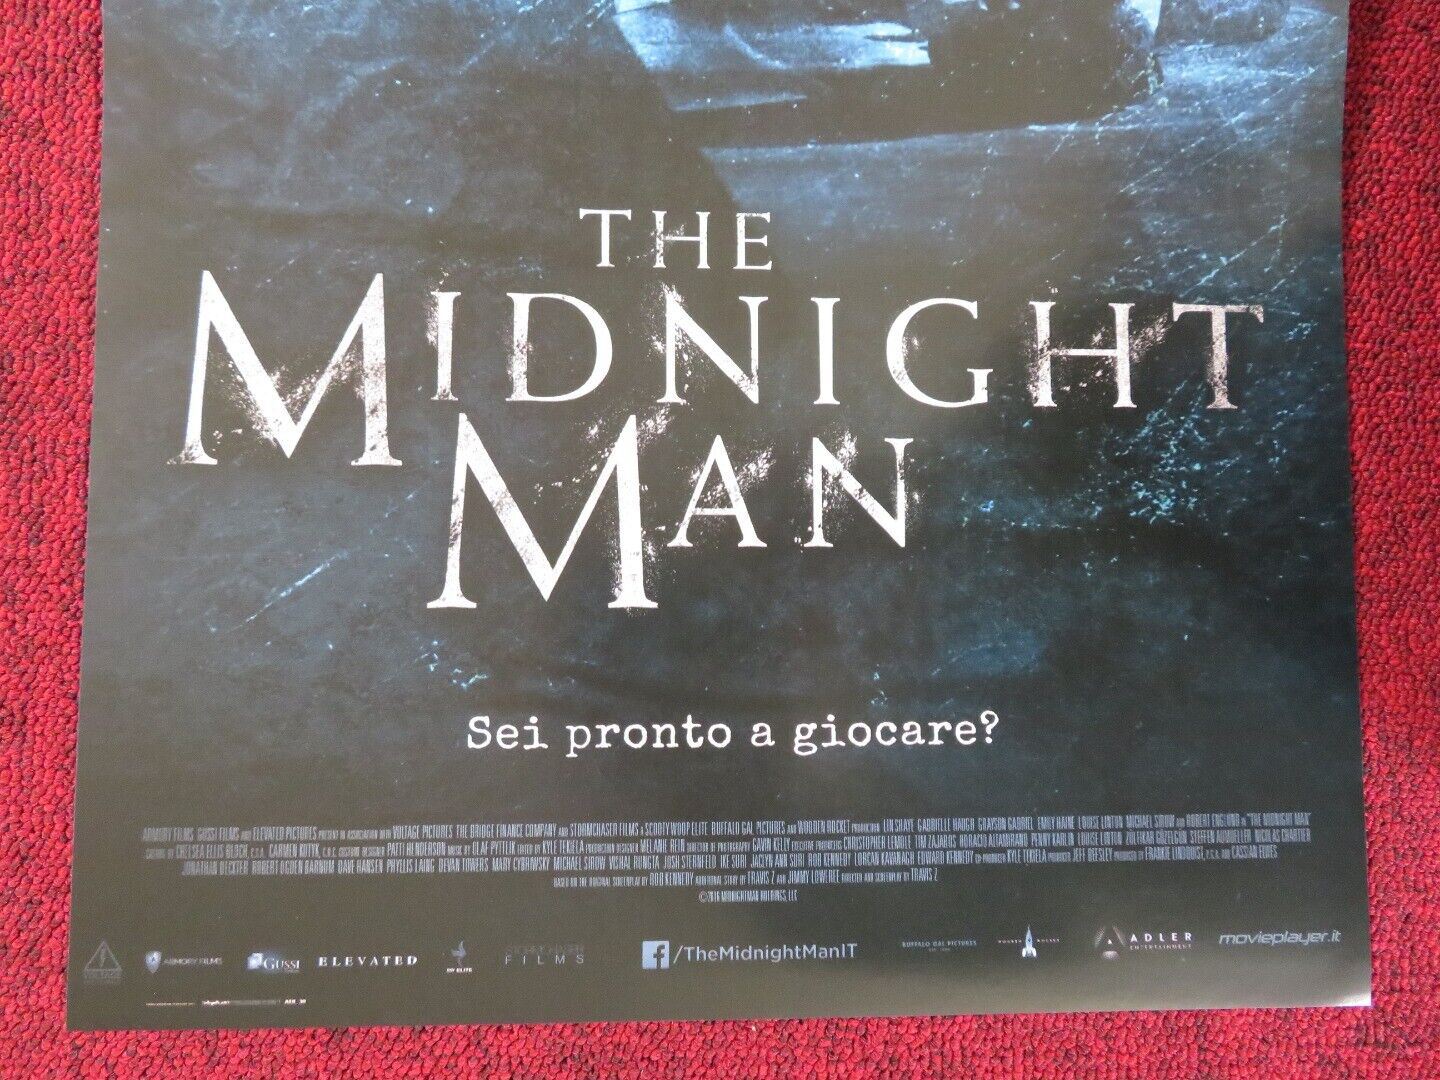 THE MIDNIGHT MAN ITALIAN LOCANDINA (26.5"x12.5") POSTER TRAVIS ZARIWNY 2018